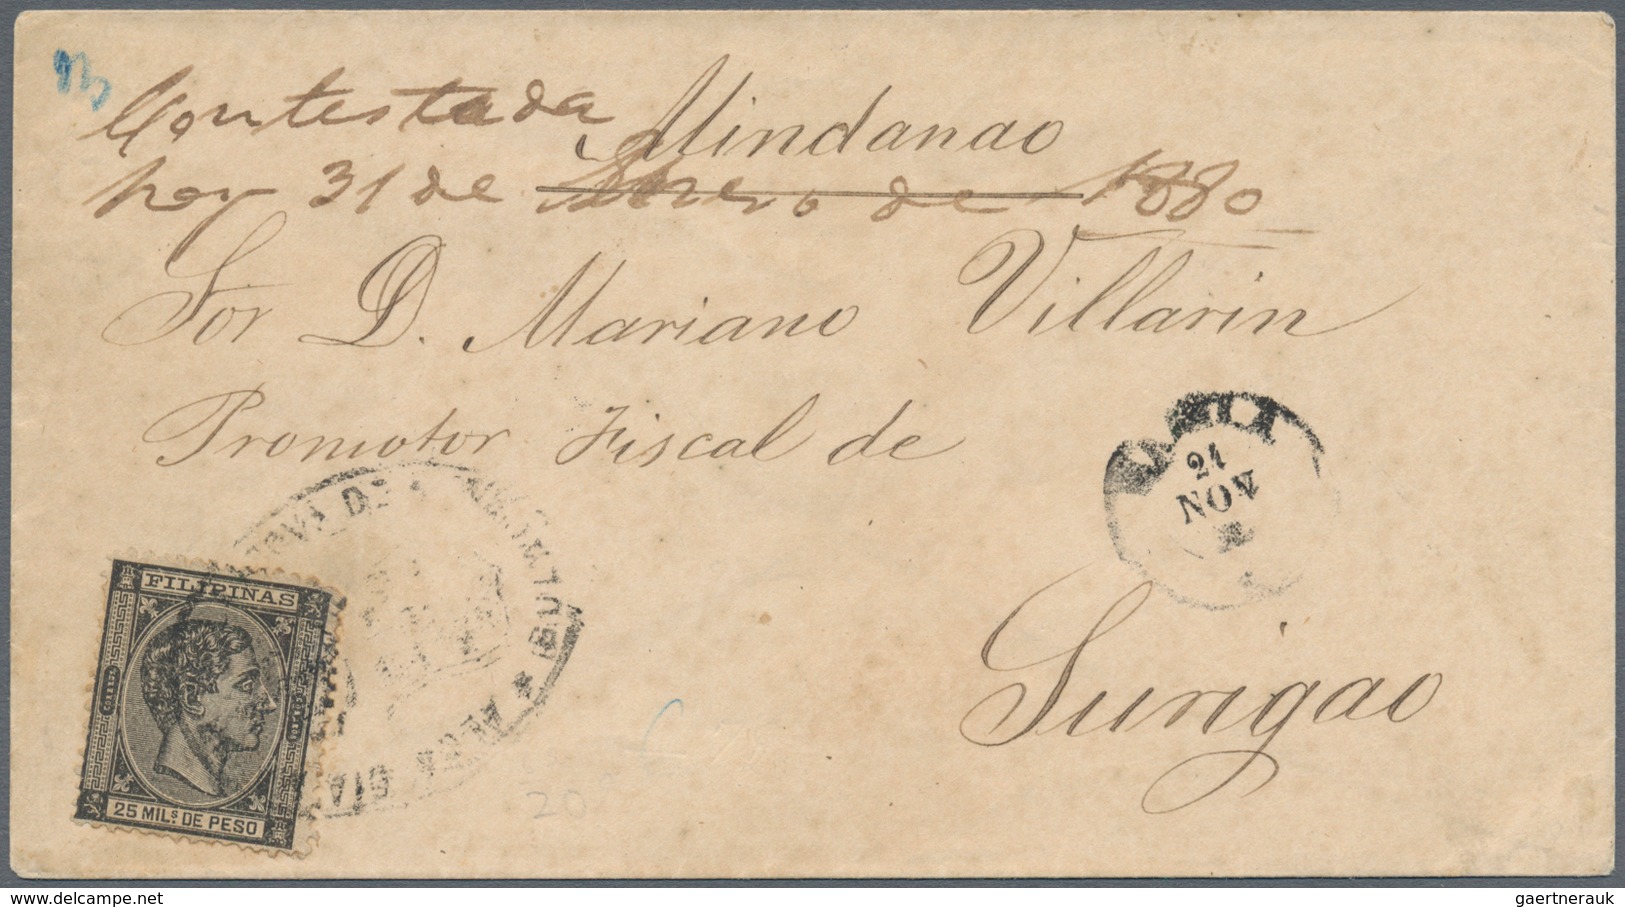 Philippinen: 1878, 25 Mils. Black On Cover From Bulacan To Surigao (Mindanao), Canc. "Alc. Mayor De - Philippinen